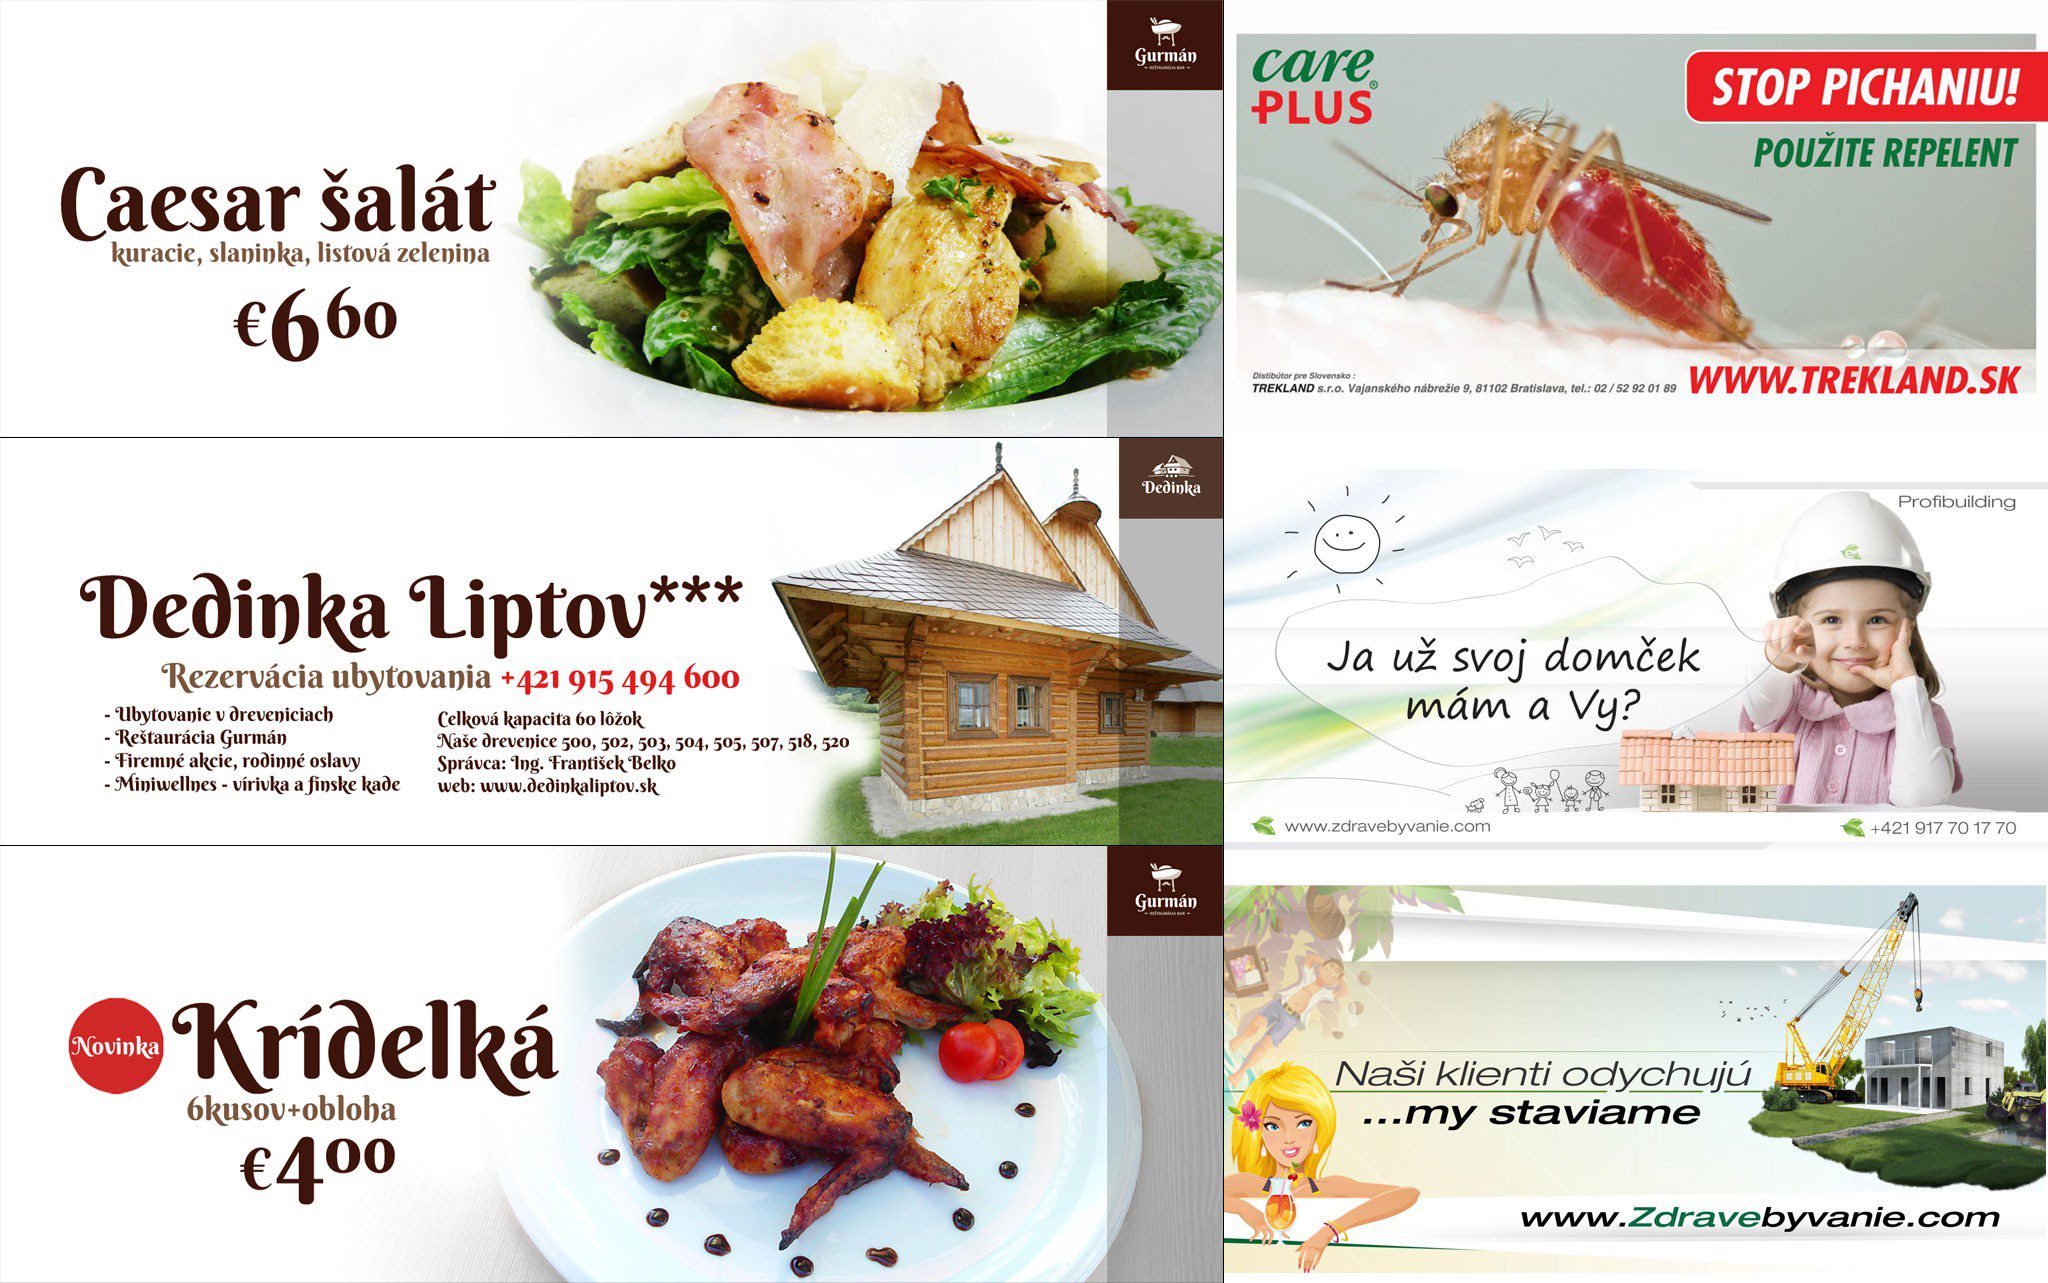 Billboard - Caesar salad, The village Liptov***, Wings, CarePLUS, Profibuilding, Healthy living